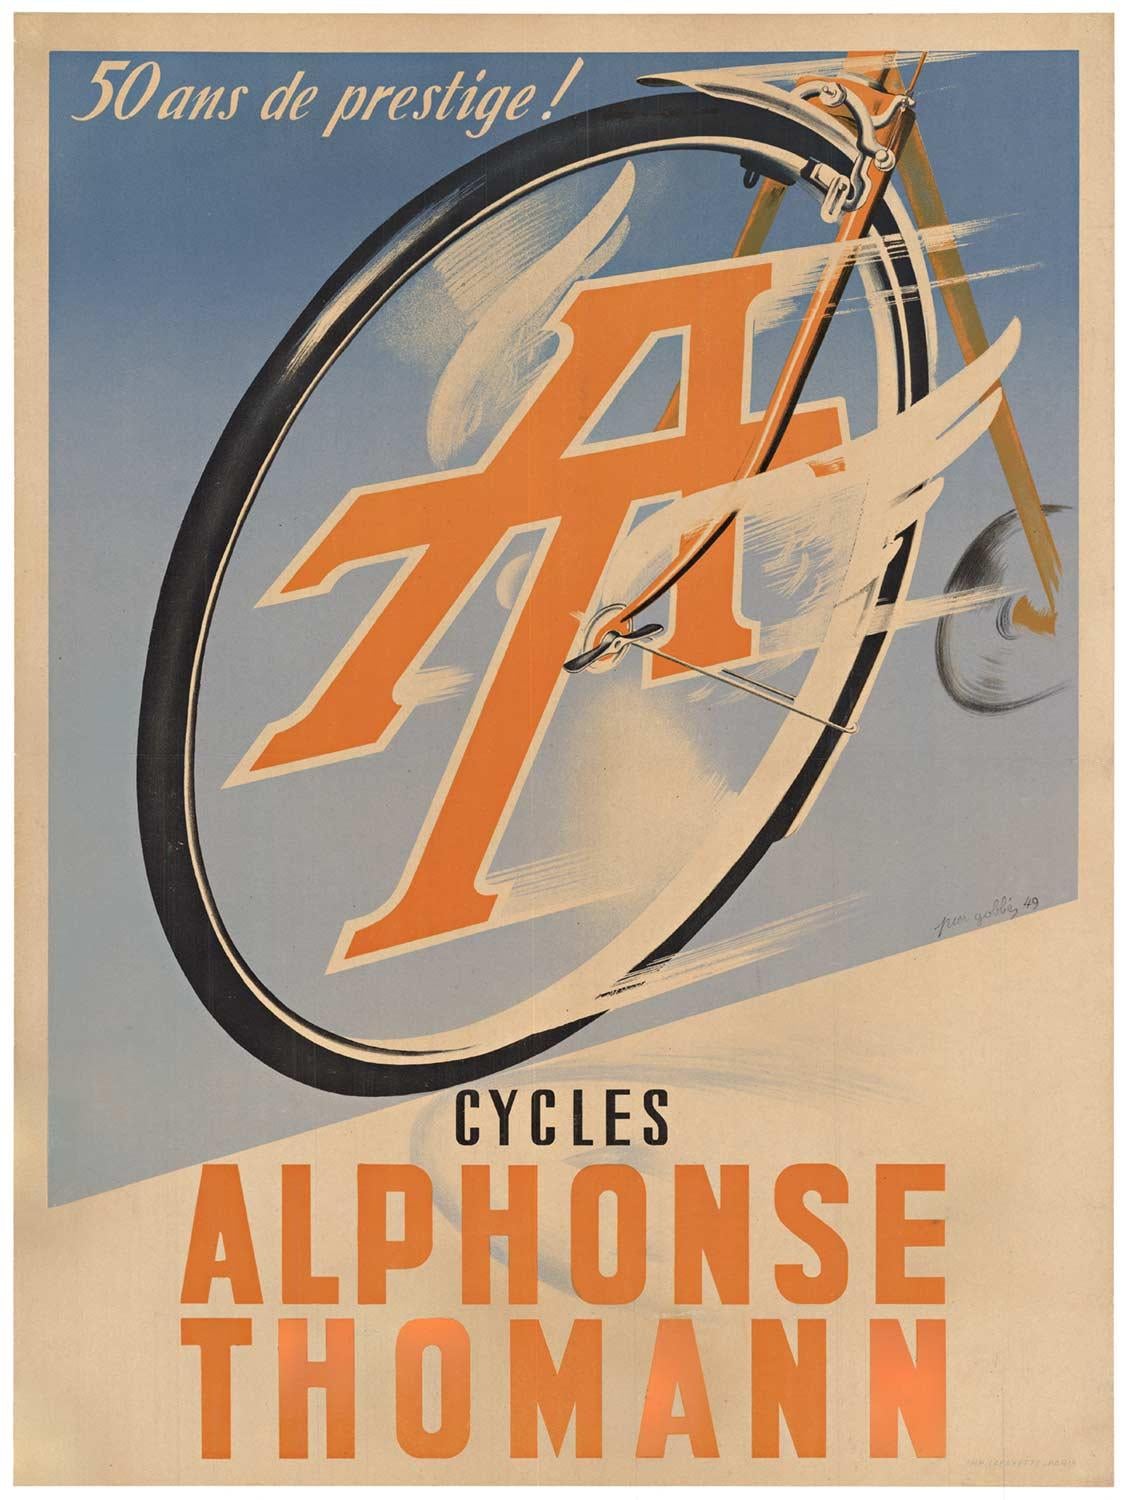 Pier Gobbe Landscape Print - Vintage "Cycles Alphonse Thomann", 50th Anniversary bicycle poster  1949 lithog